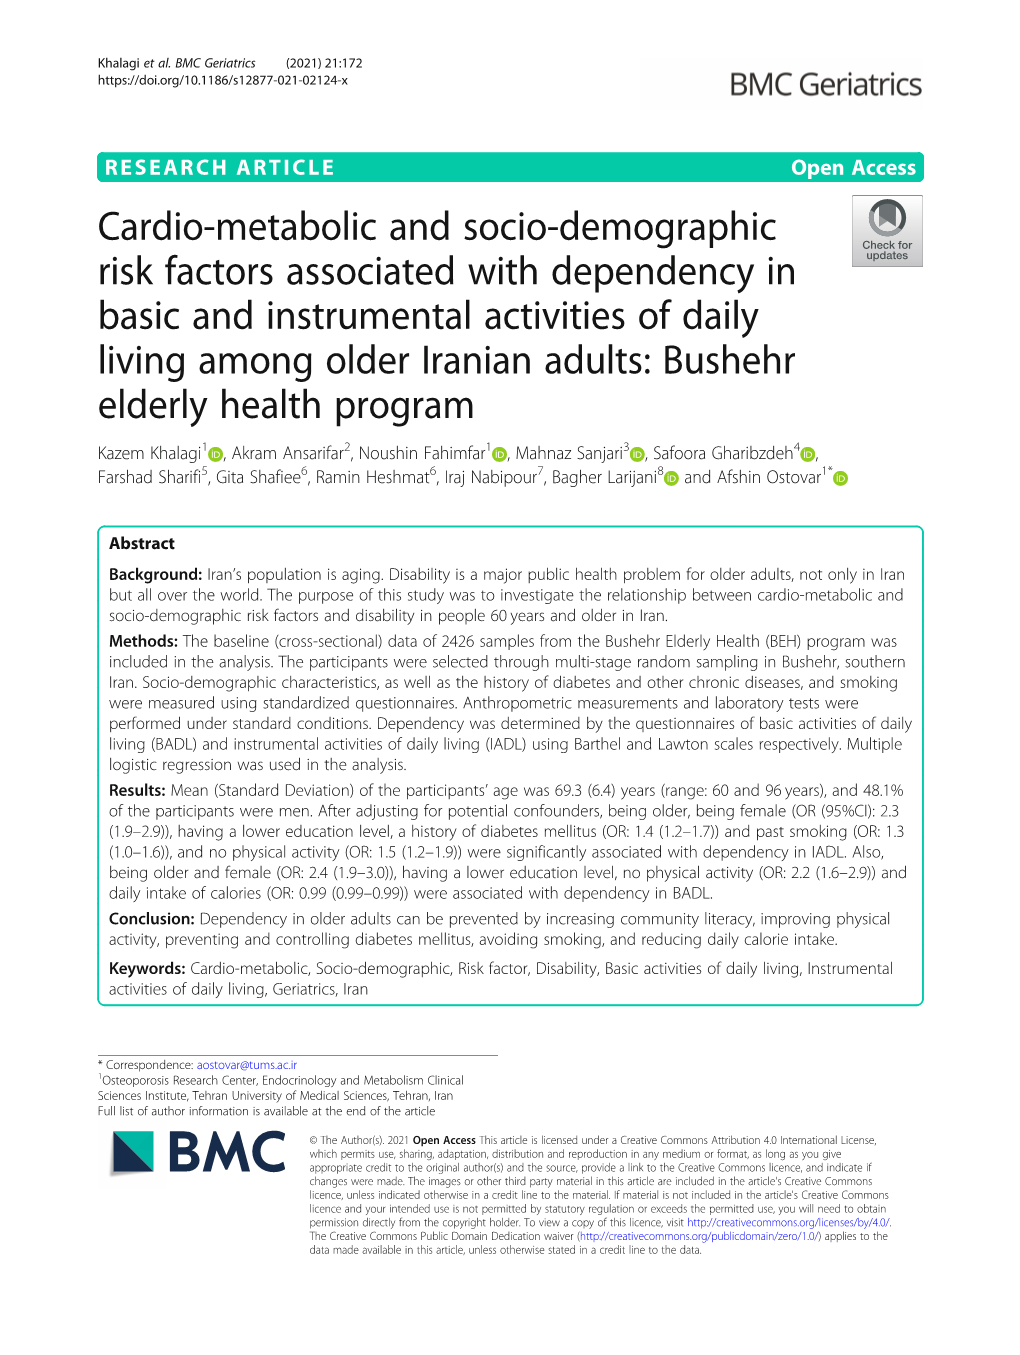 Cardio-Metabolic and Socio-Demographic Risk Factors